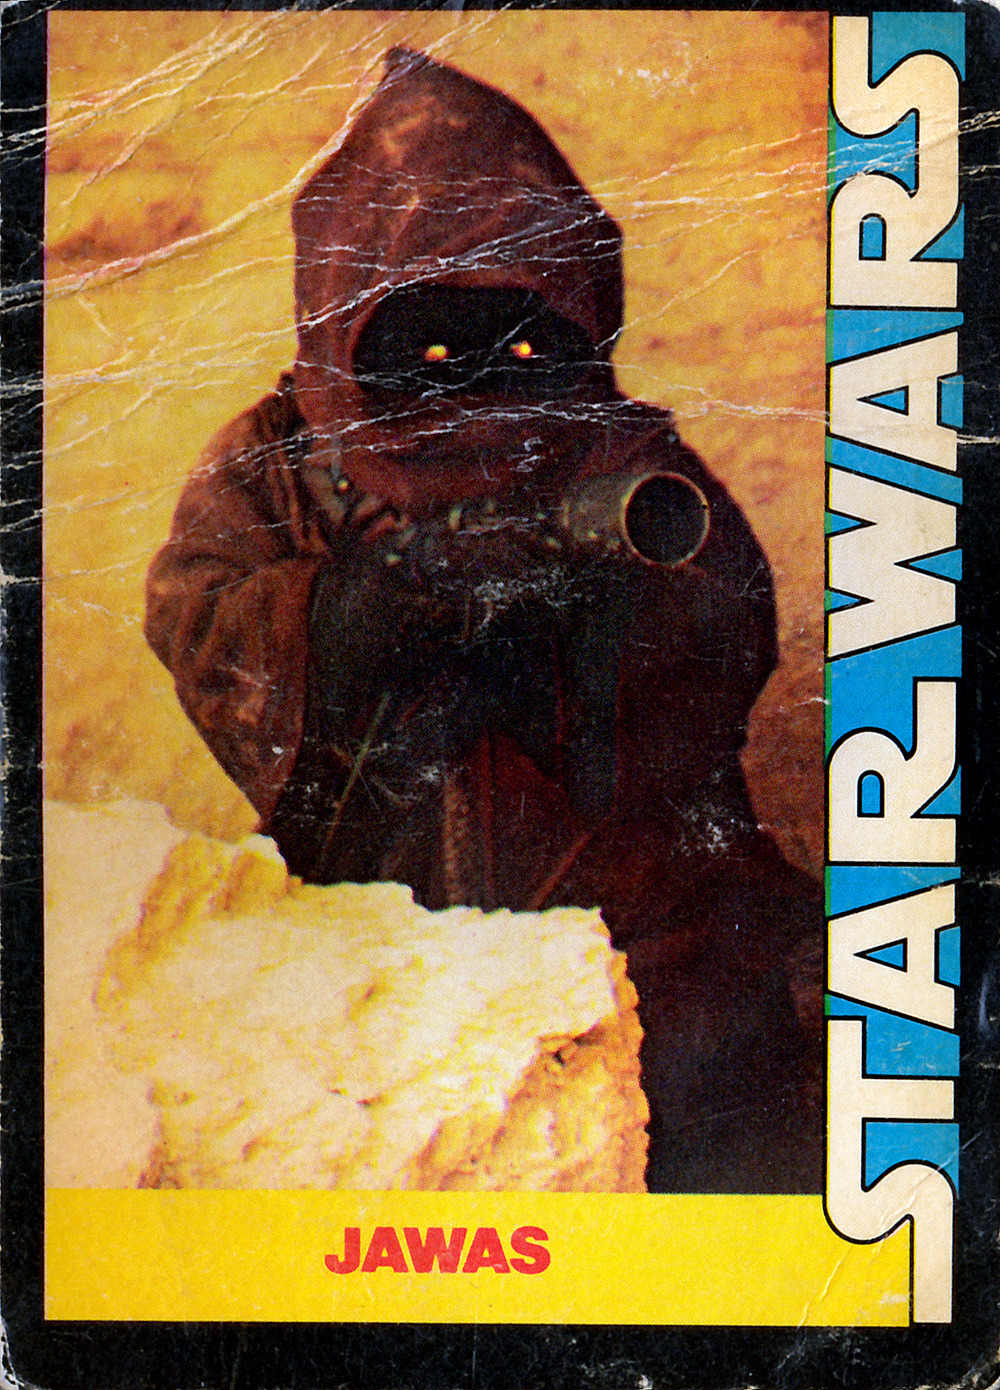 STAR WARS (1977)